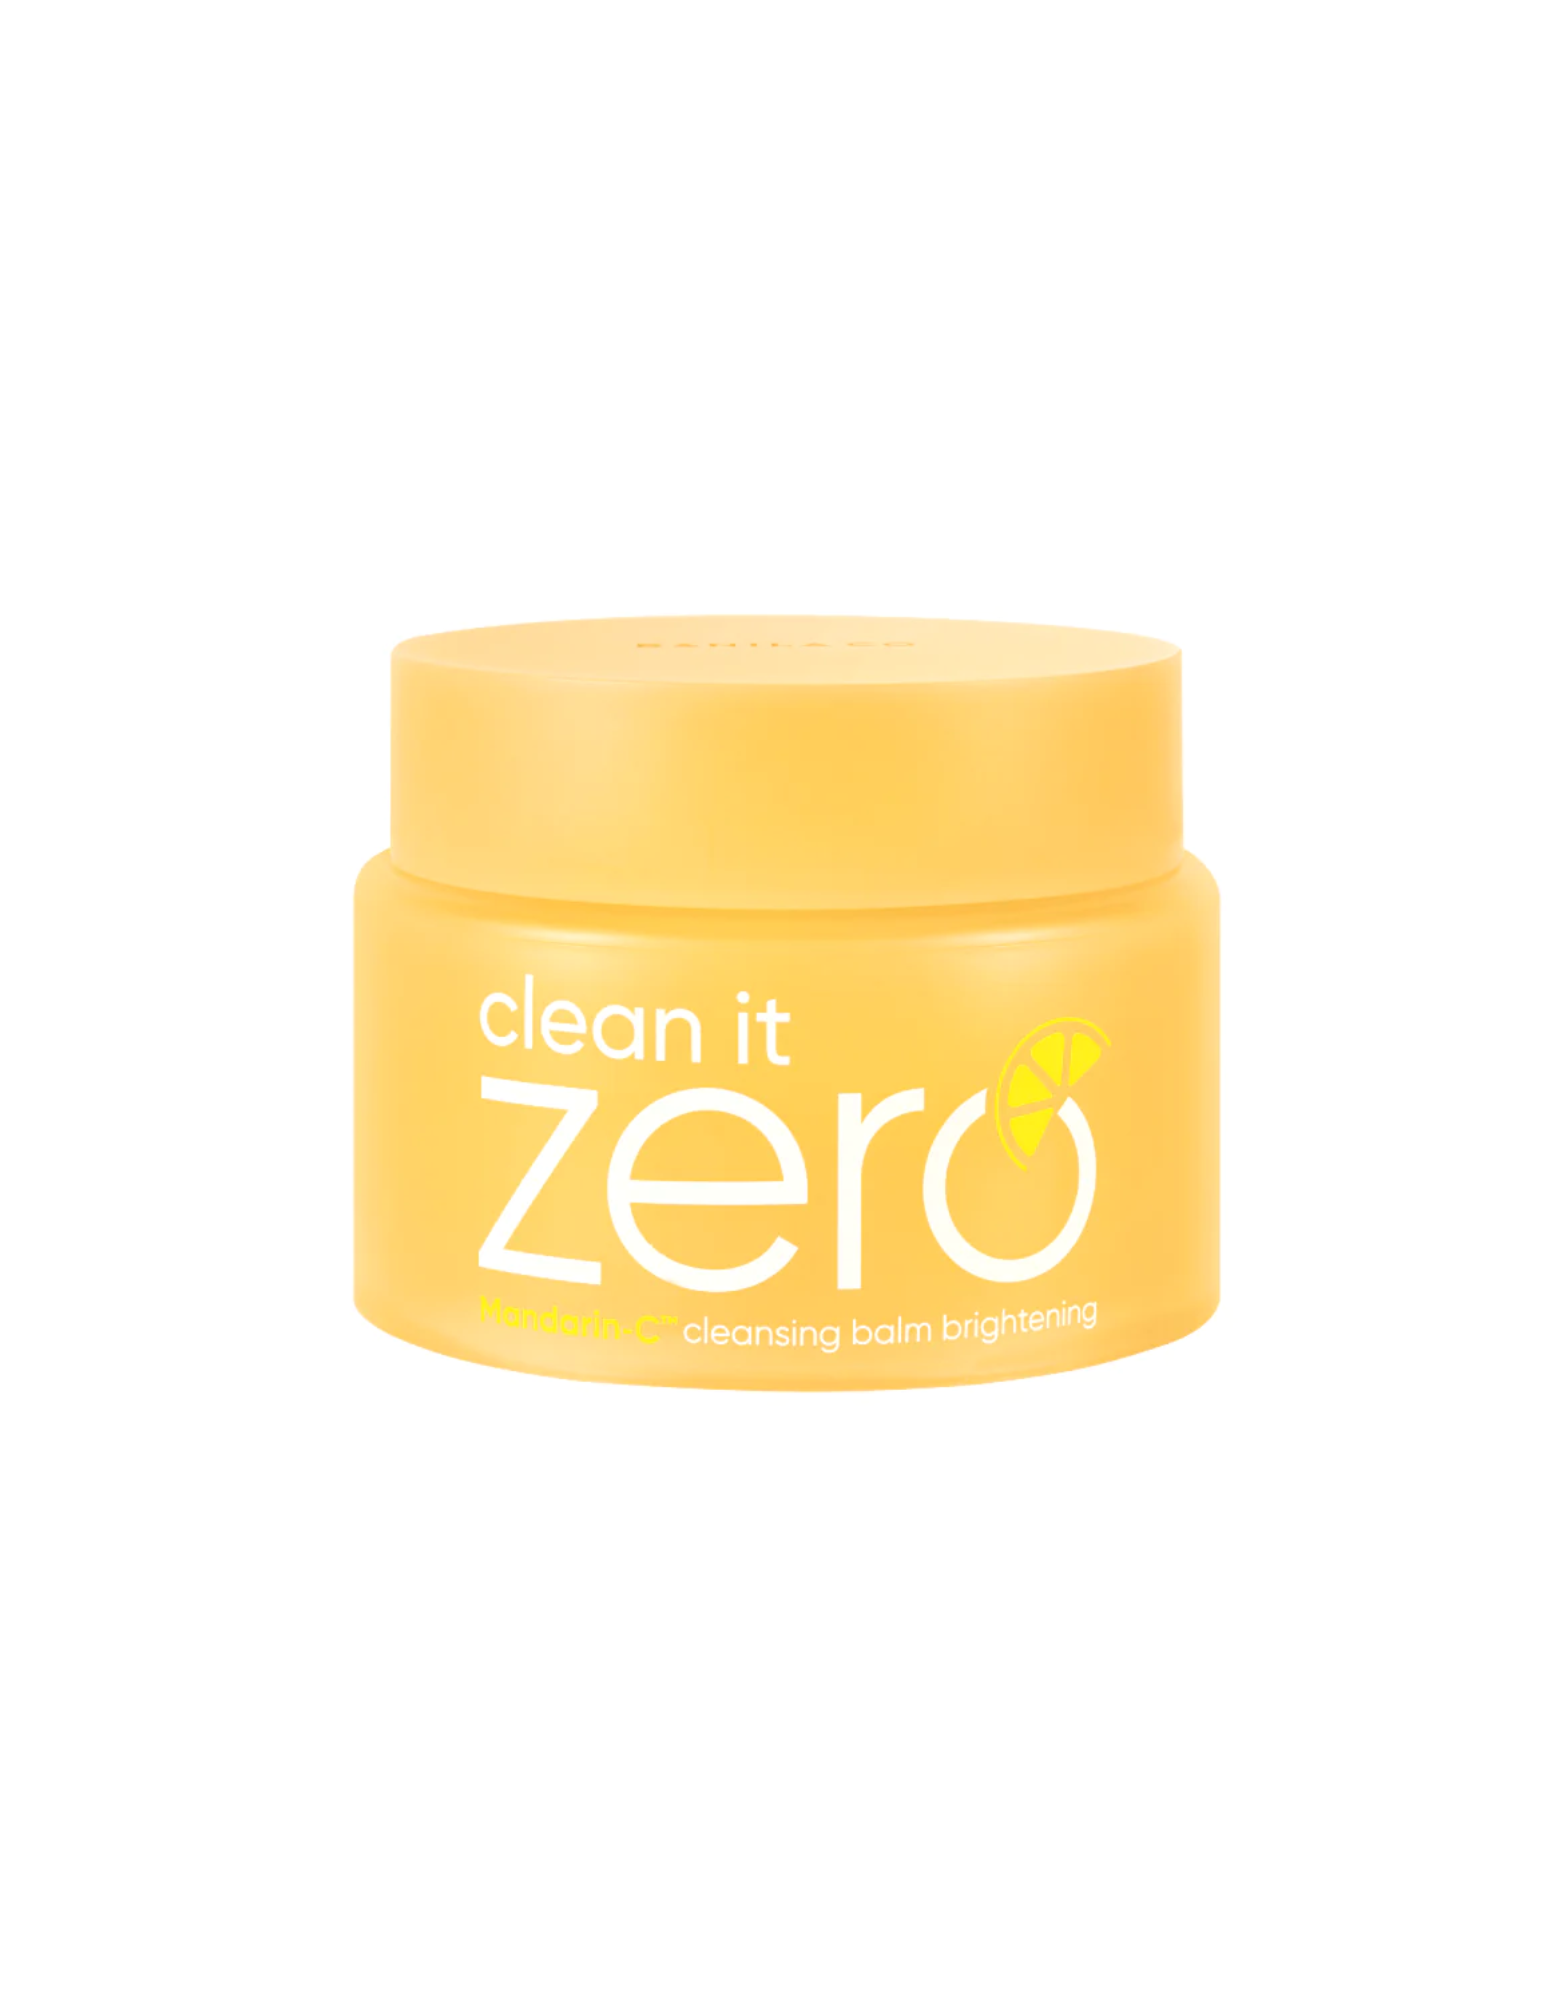 Banila Co Clean it Zero Mandarin-C Cleansing Balm Brightening